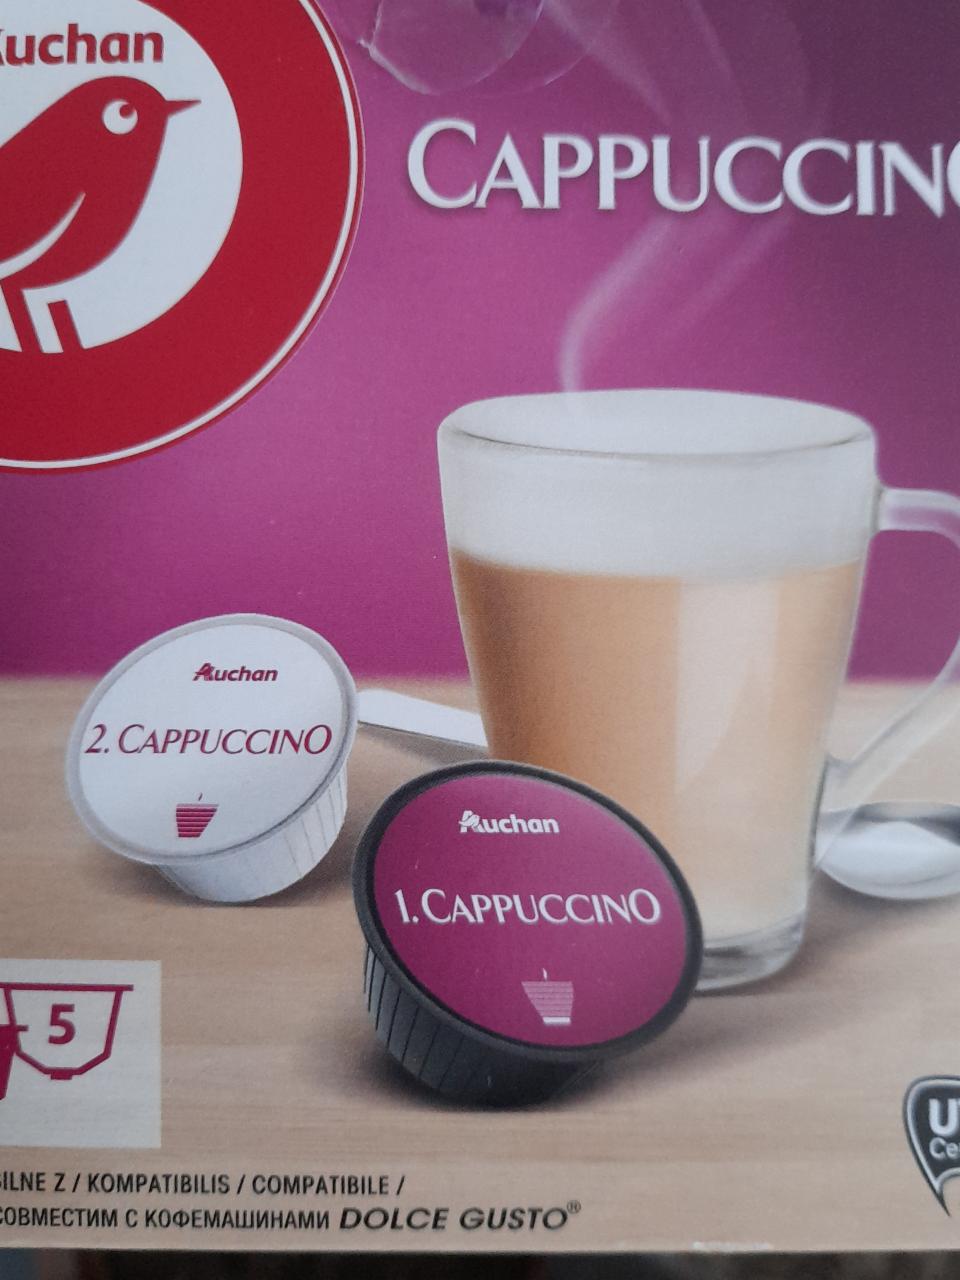 Képek - Dolce gusto kompatibilis kávékapszula Cappuccino Auchan